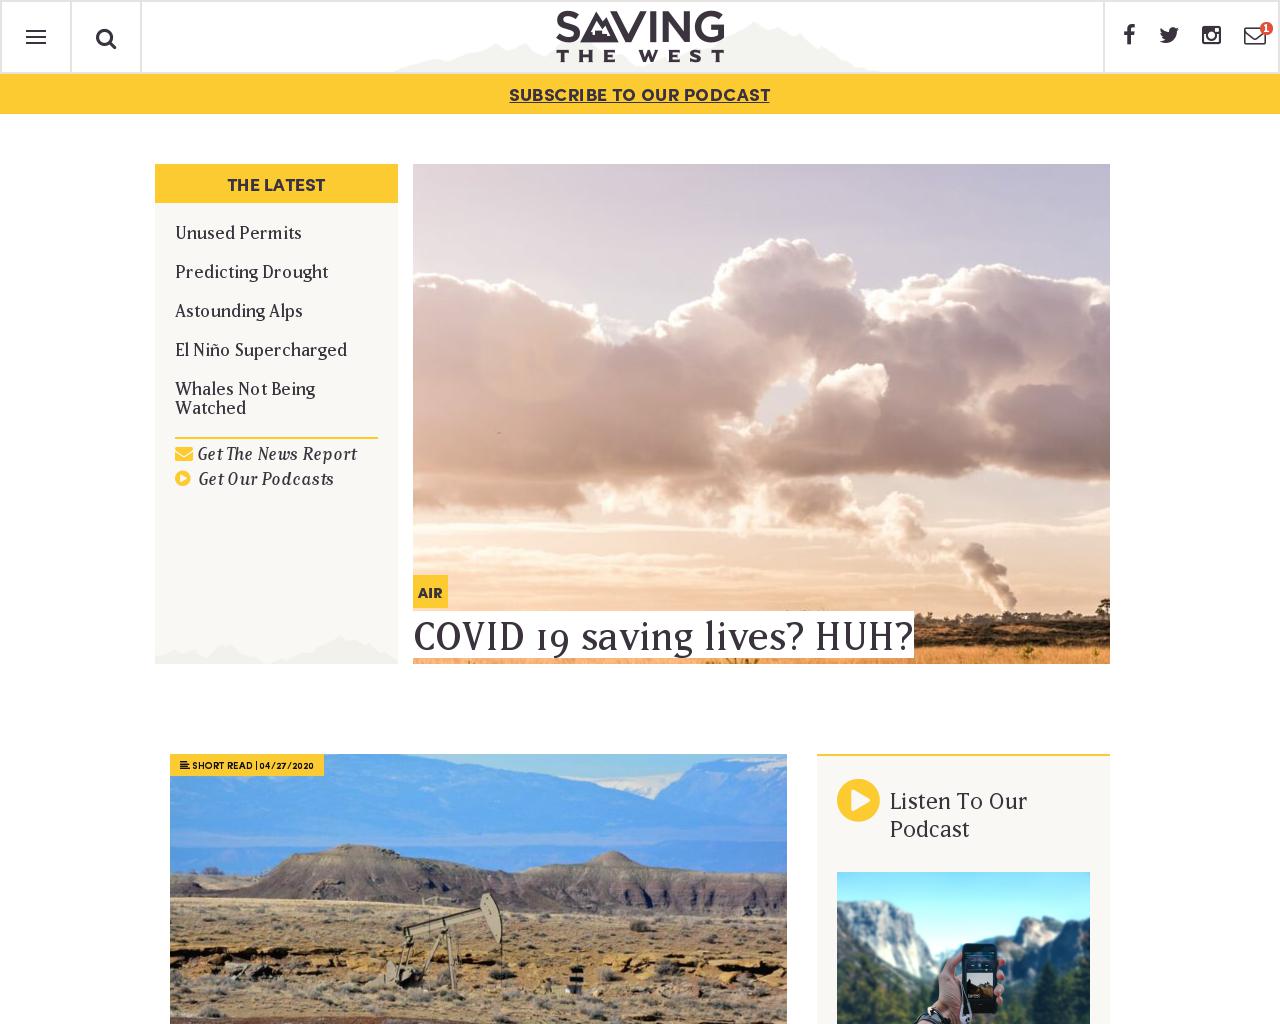 savingthewest.org